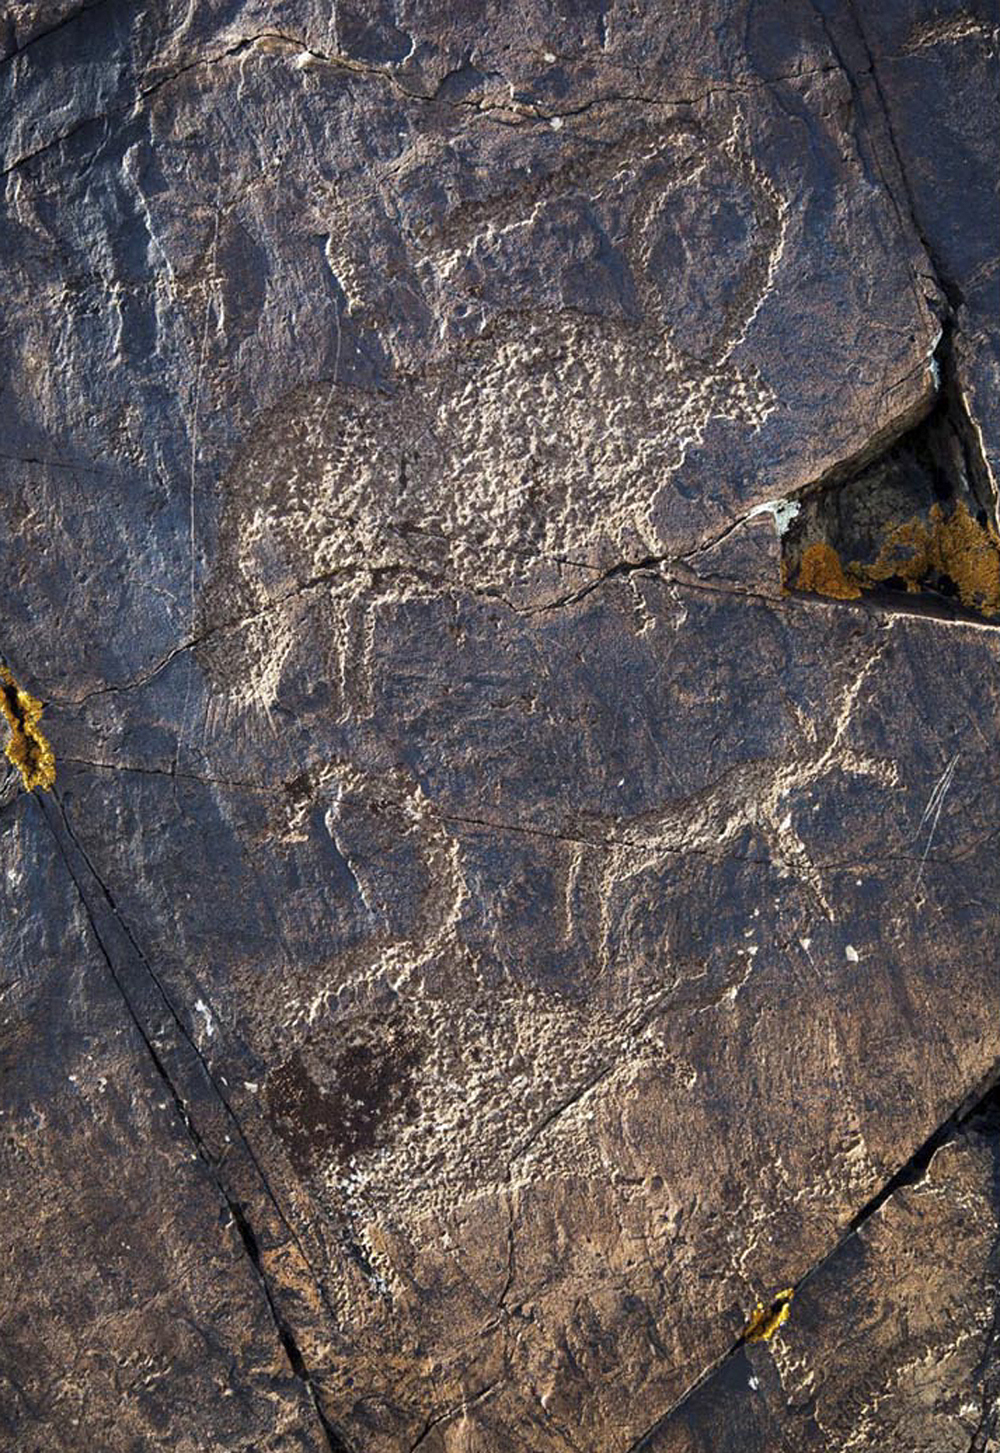 Discovery of petroglyph sequence at Kara Turug, Mongolia